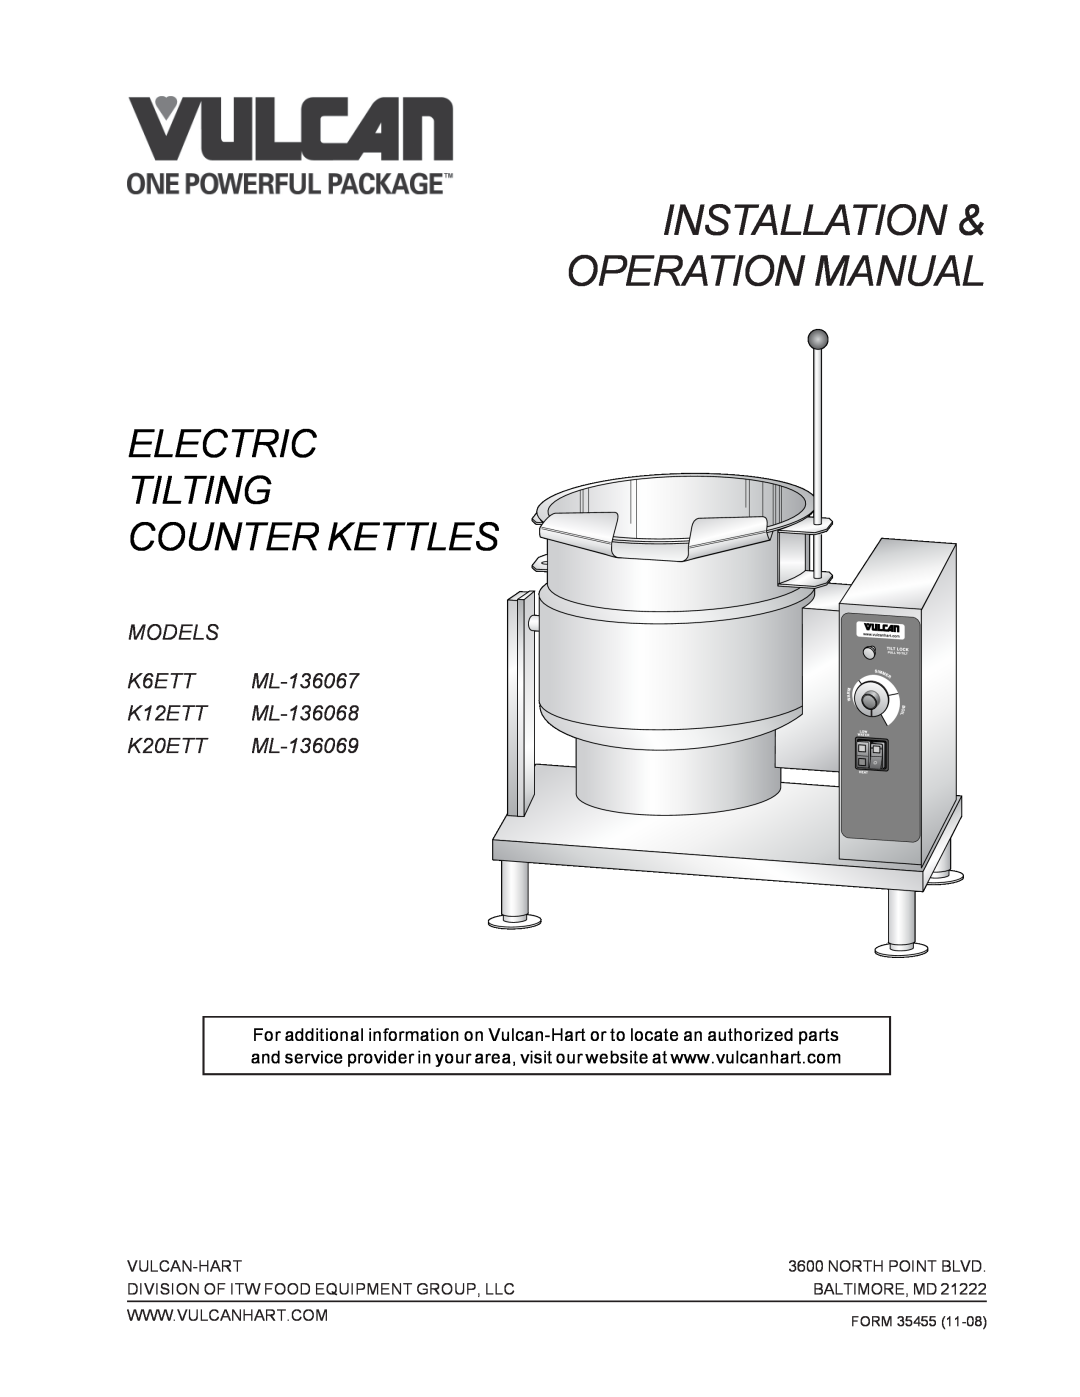 Vulcan-Hart K20ETT operation manual Electric Tilting Counter Kettles, Vulcan-Hart, North Point Blvd, Baltimore, Md, Form 